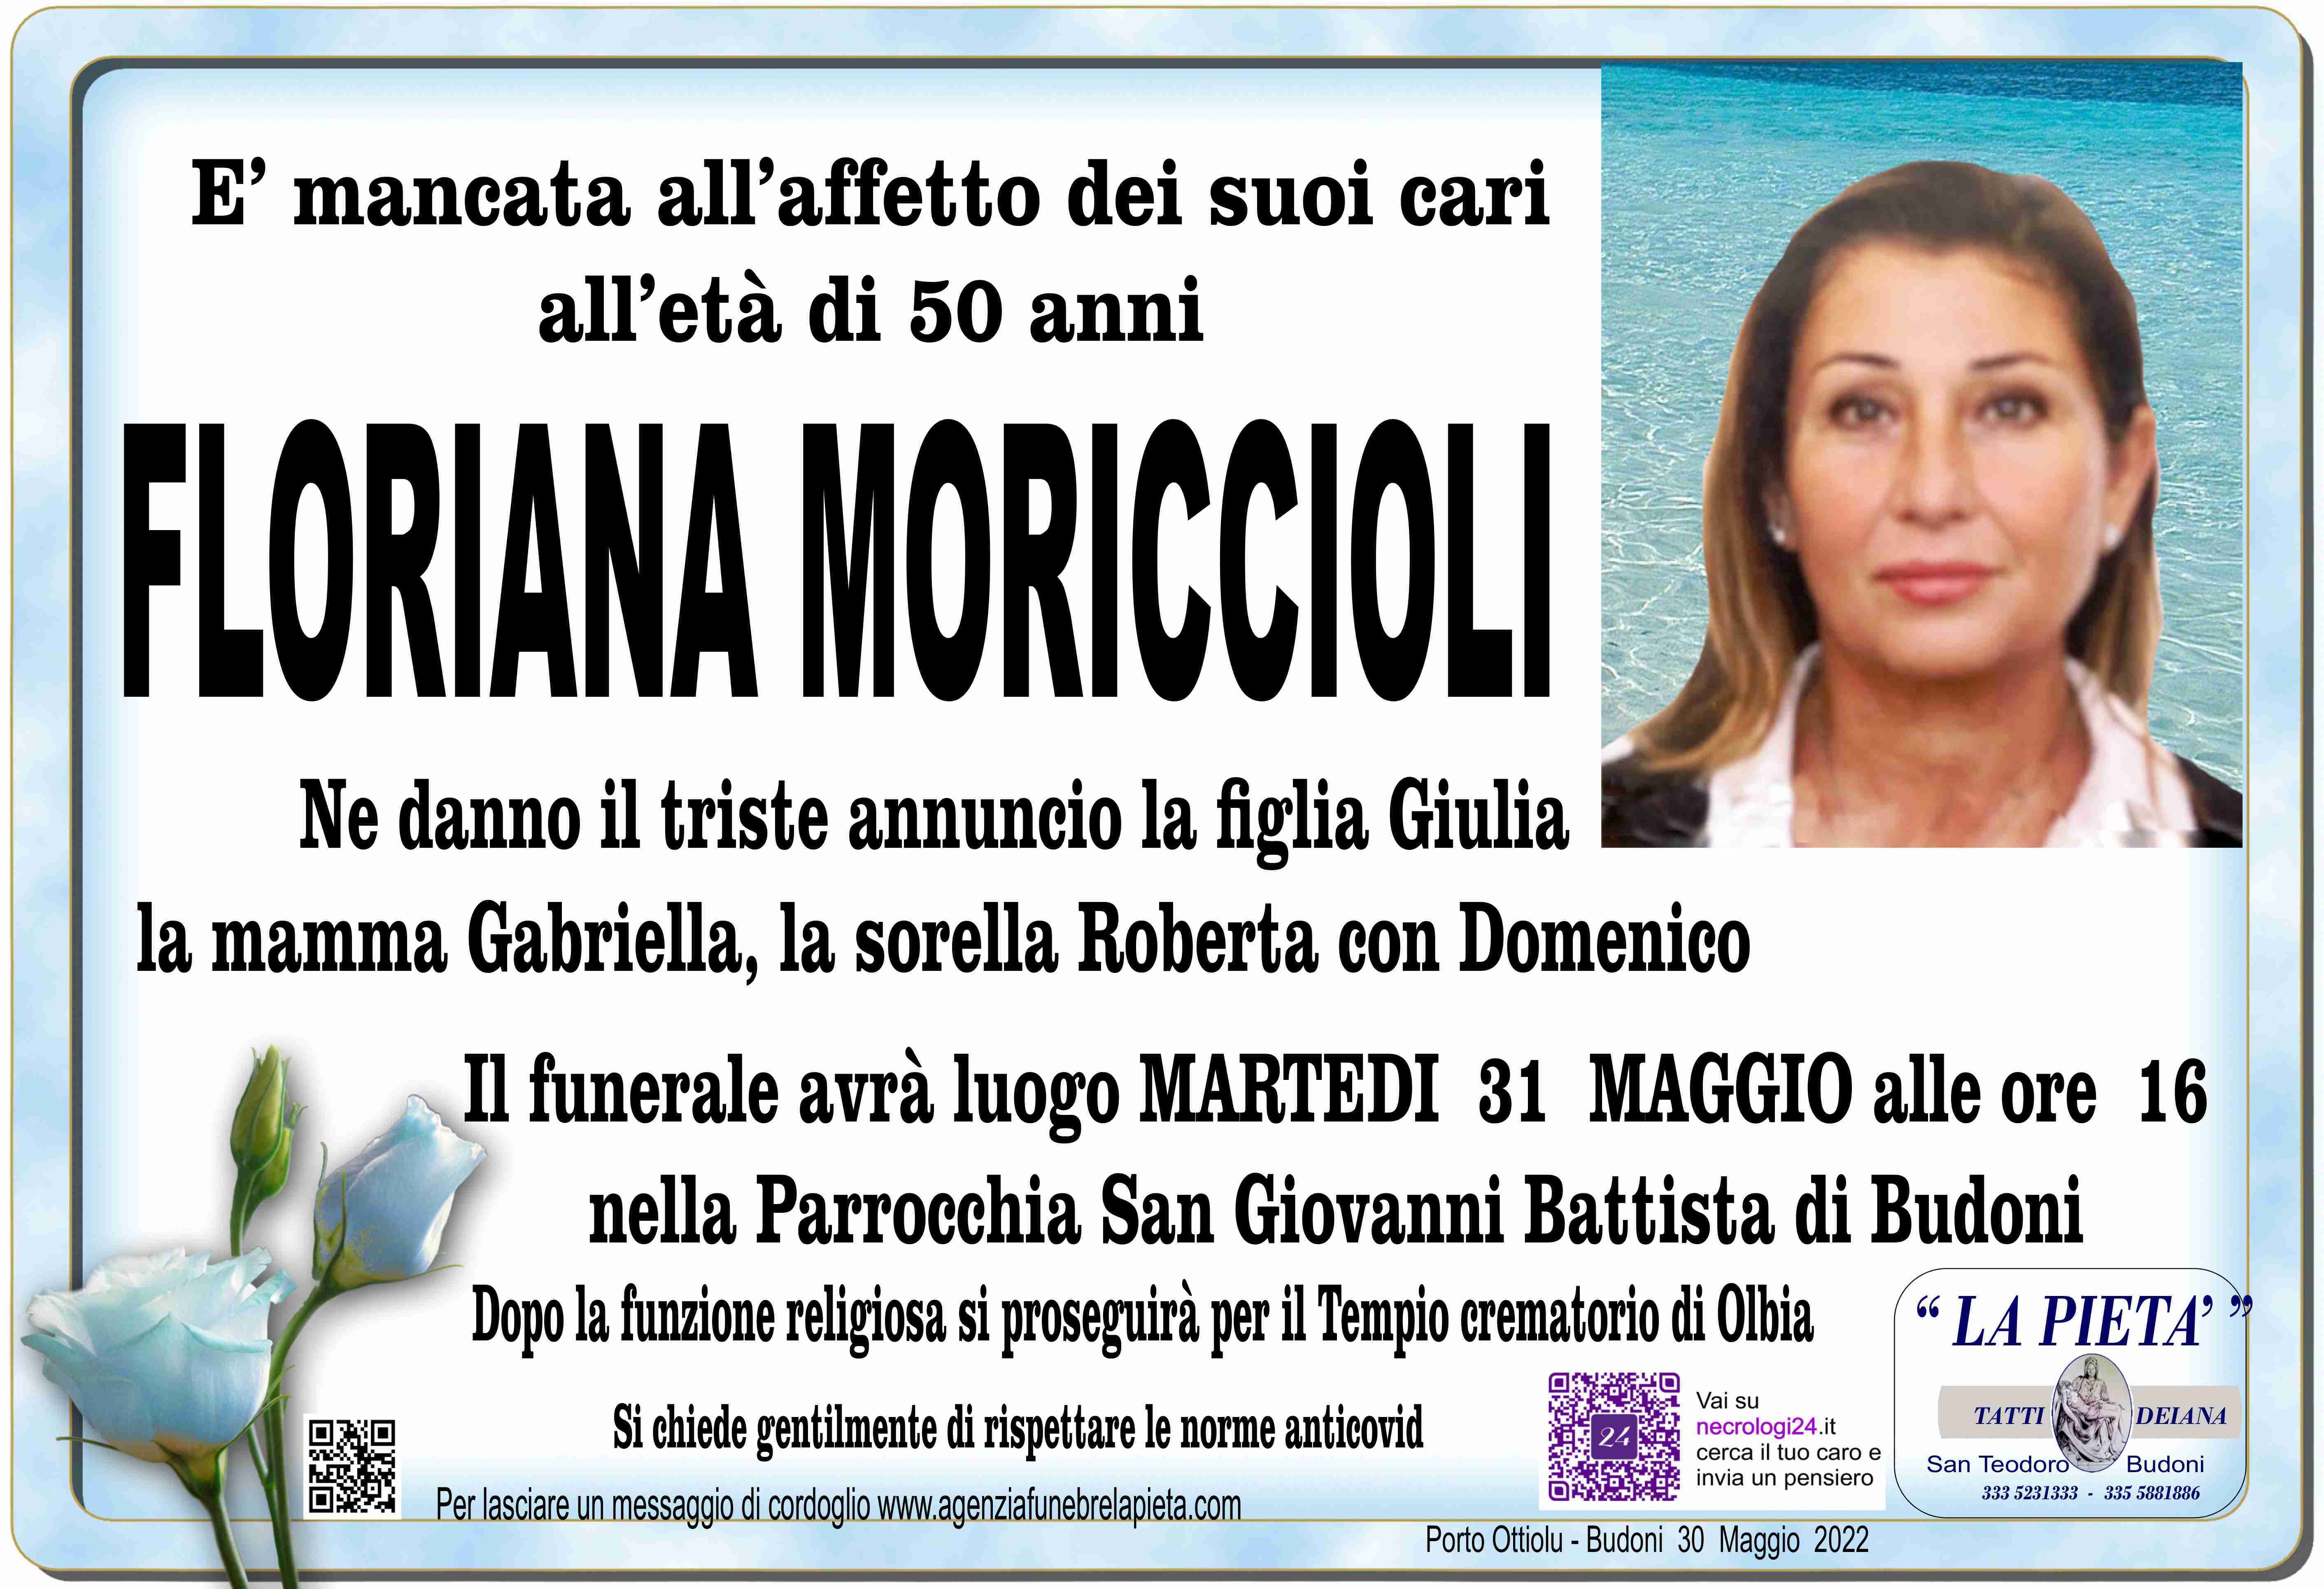 Floriana Moriccioli